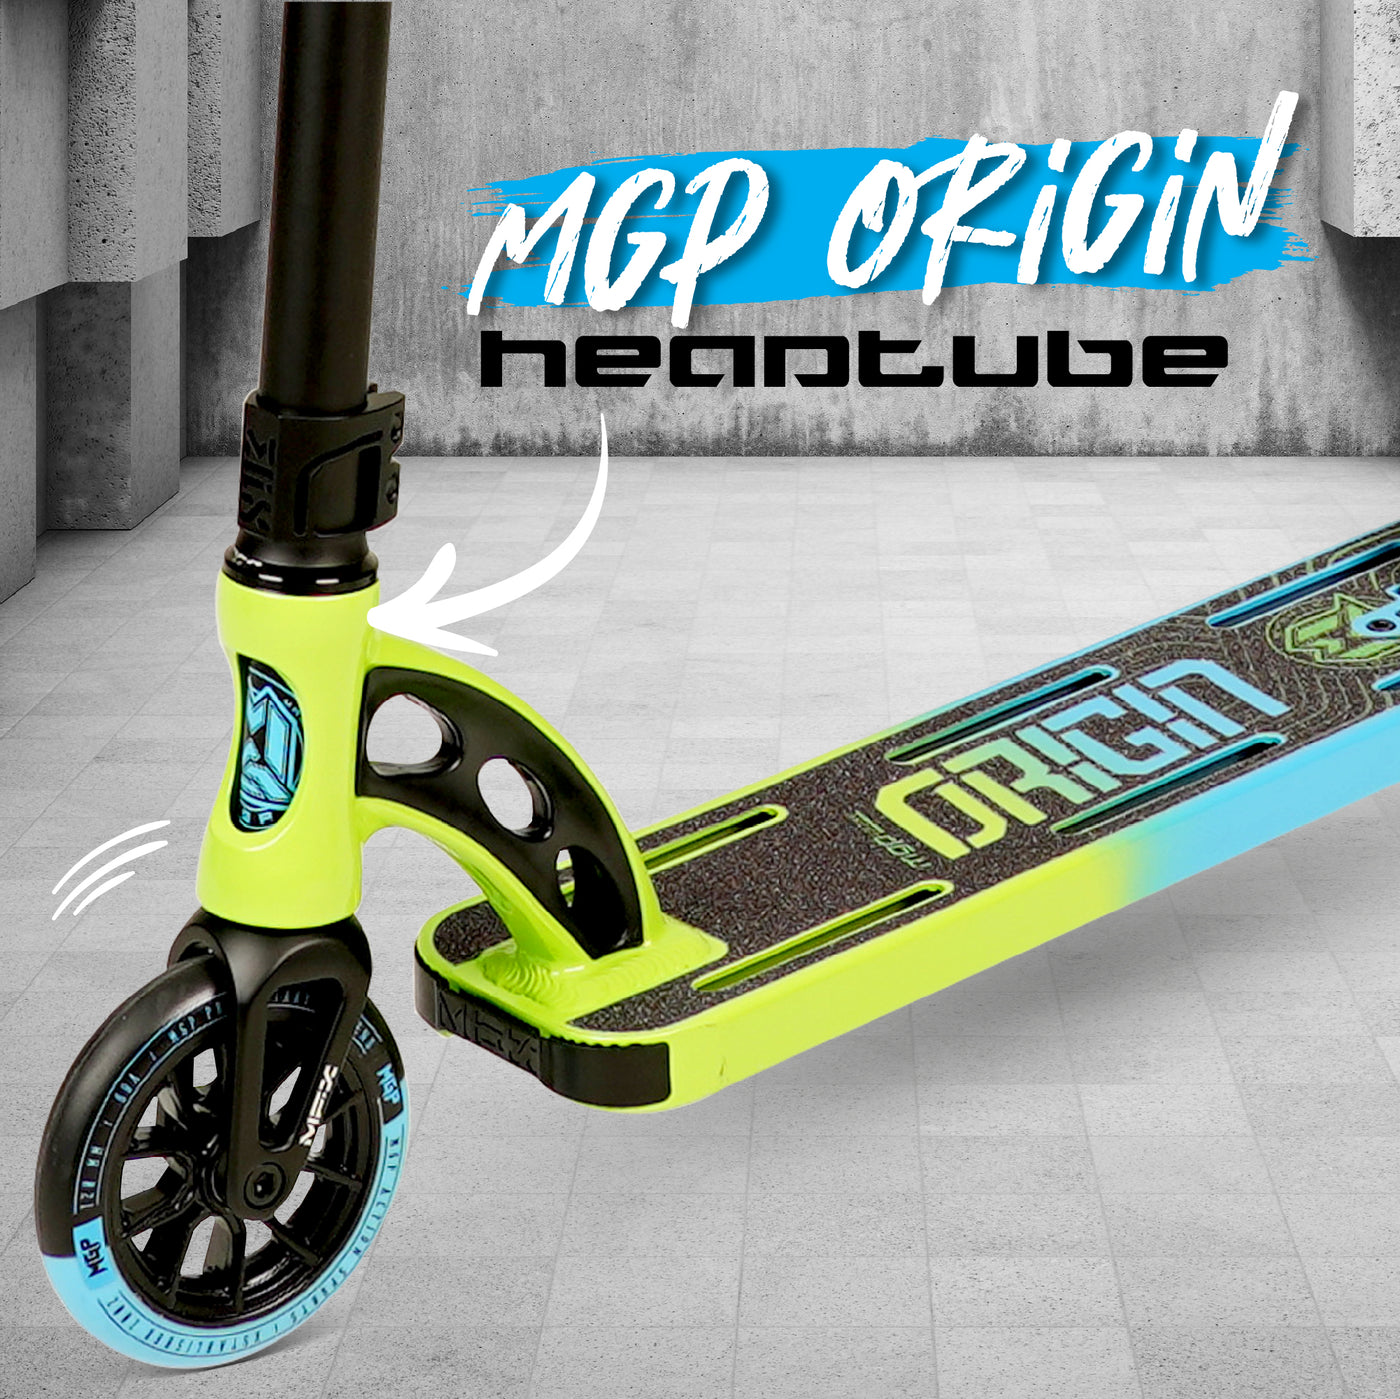 Madd Gear MGP Origin Pro Stunt Scooter Green Lime Blue Kids Boys Skate Park Best Lightest Headtube